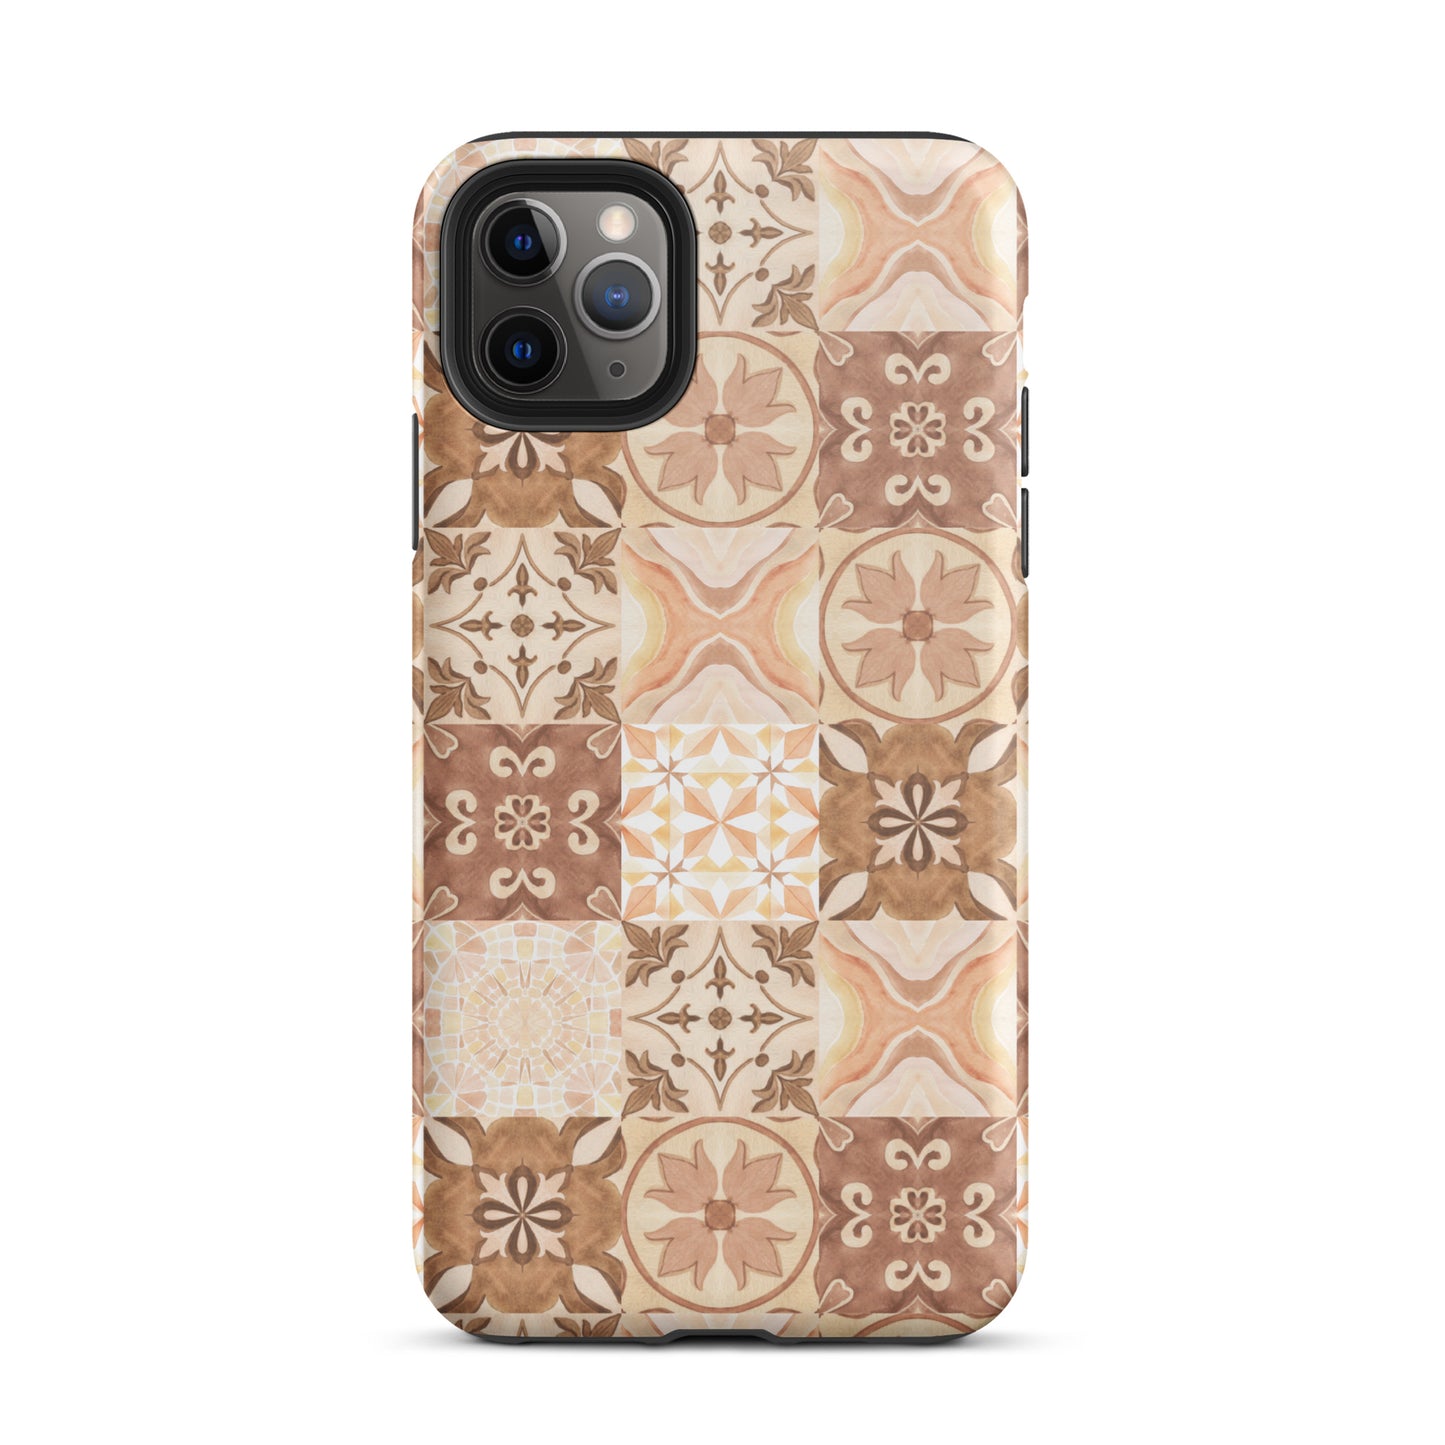 Moroccan Desert Tile Tough iPhone® Case - The Global Wanderer